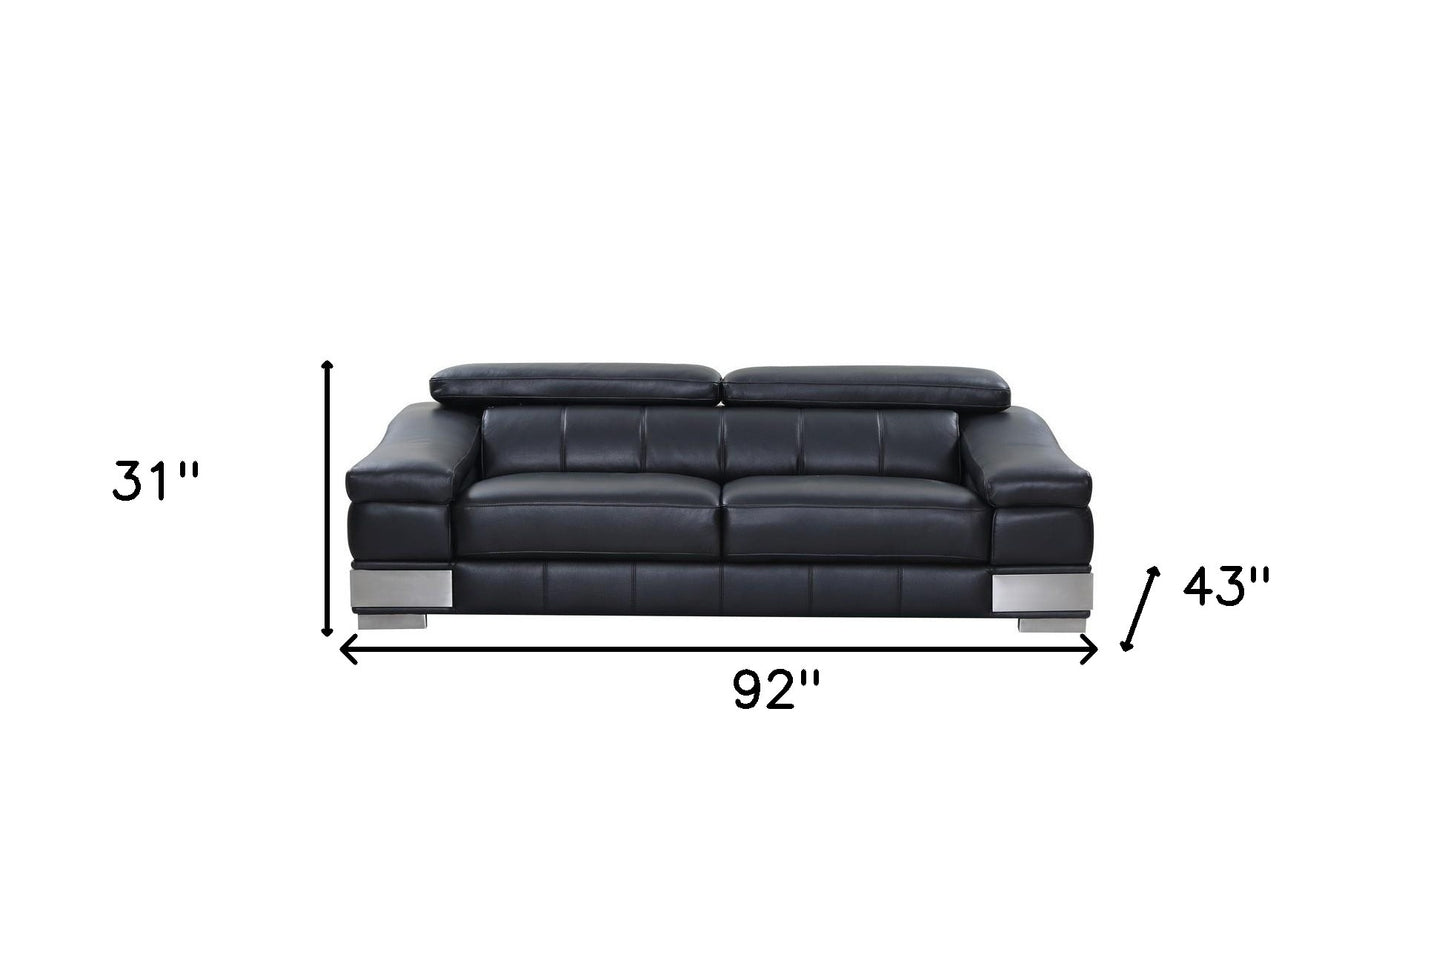 92" Black And Silver Italian Leather Sofa